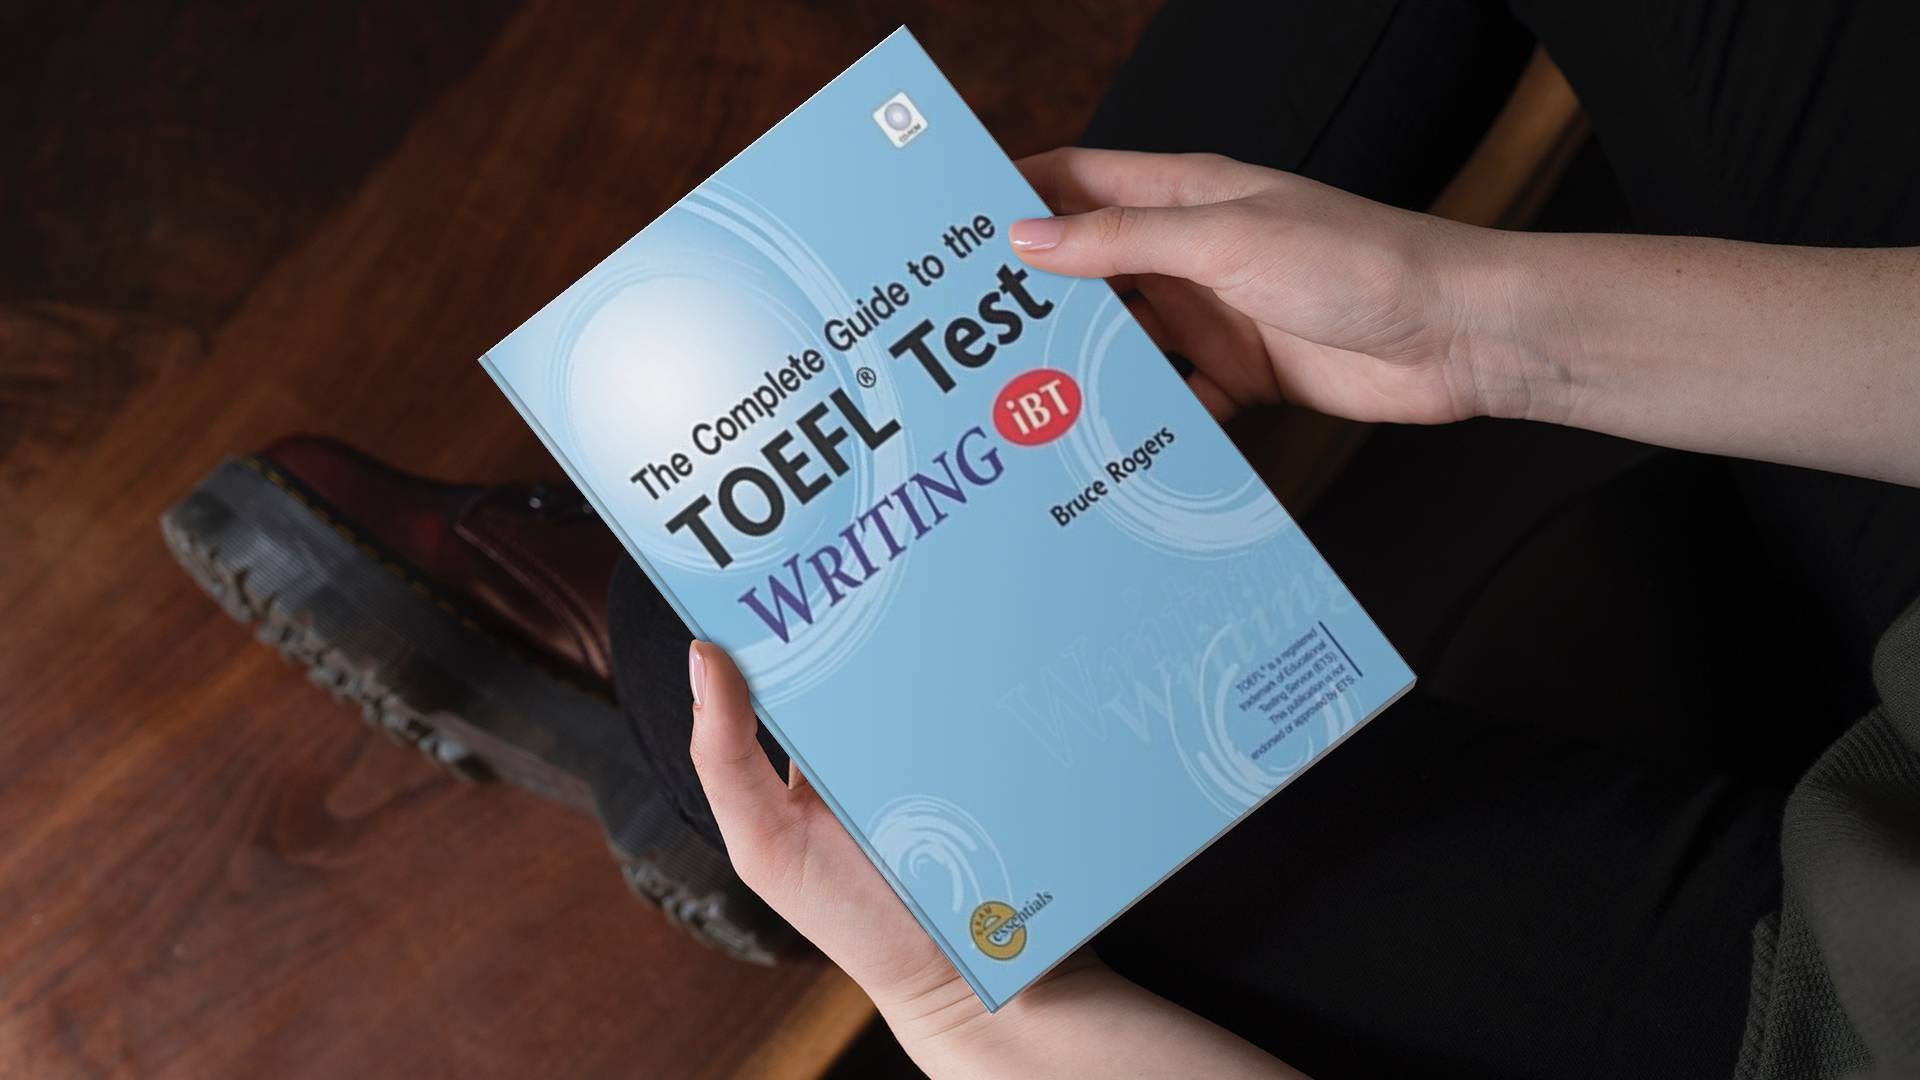 کتاب The Complete Guide to the TOEFL Test WRITING iBT کامپلیت گاید تو د تافل تست رایتینگ